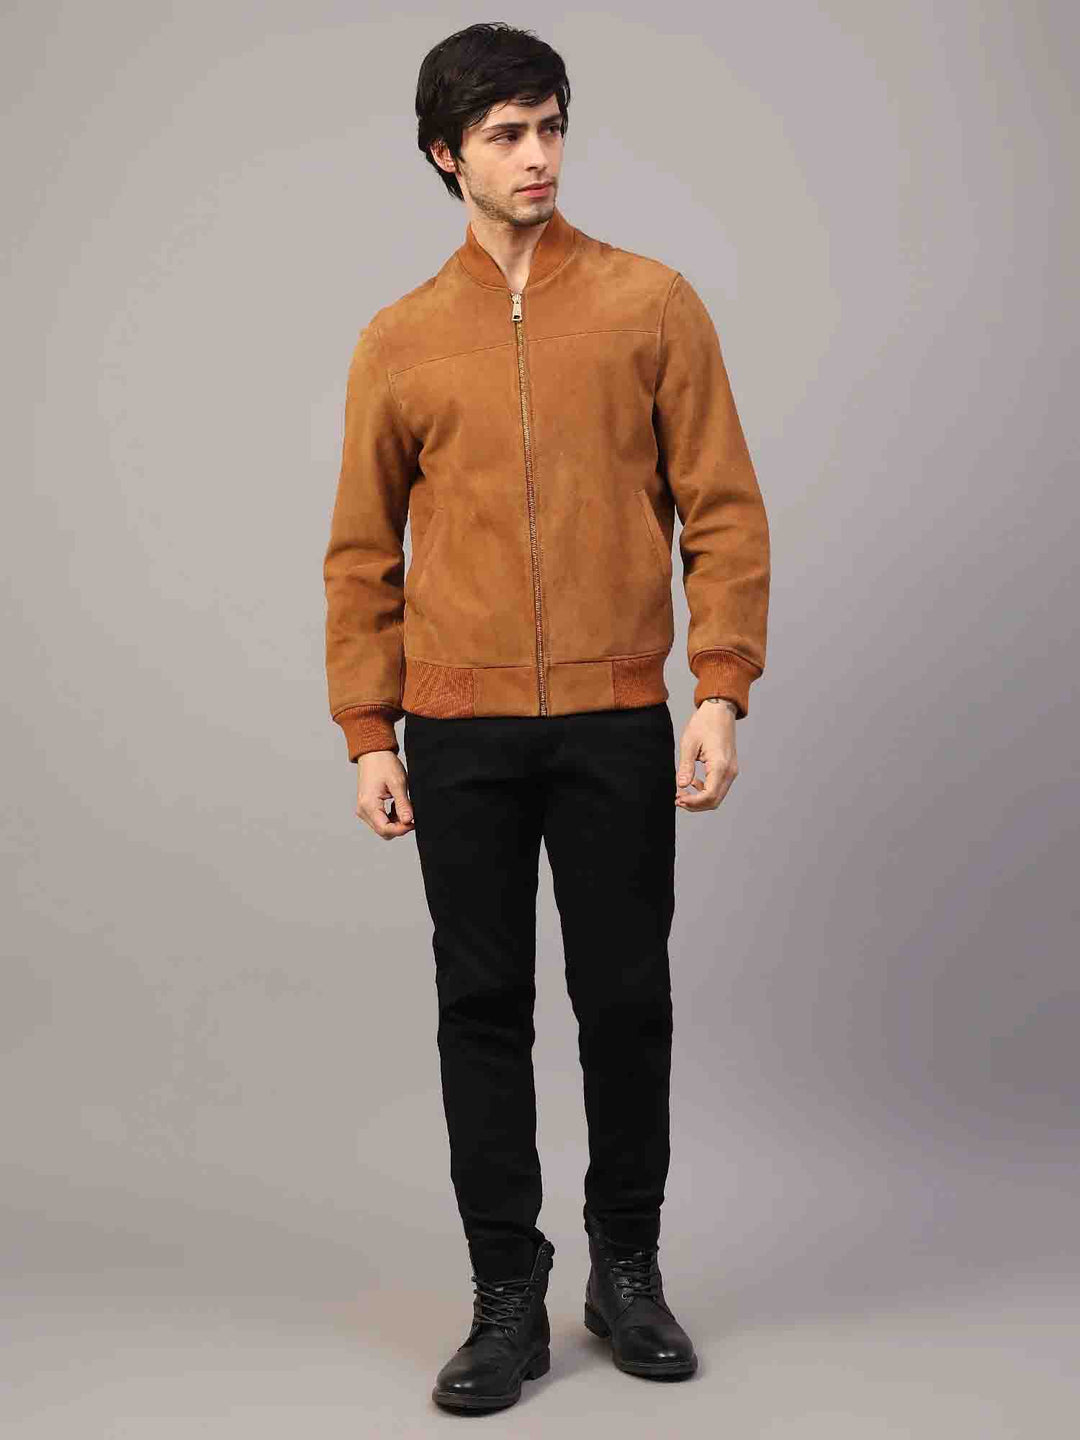 Saint Lorenzo Tan Leather Men's Bomber Style Jackets